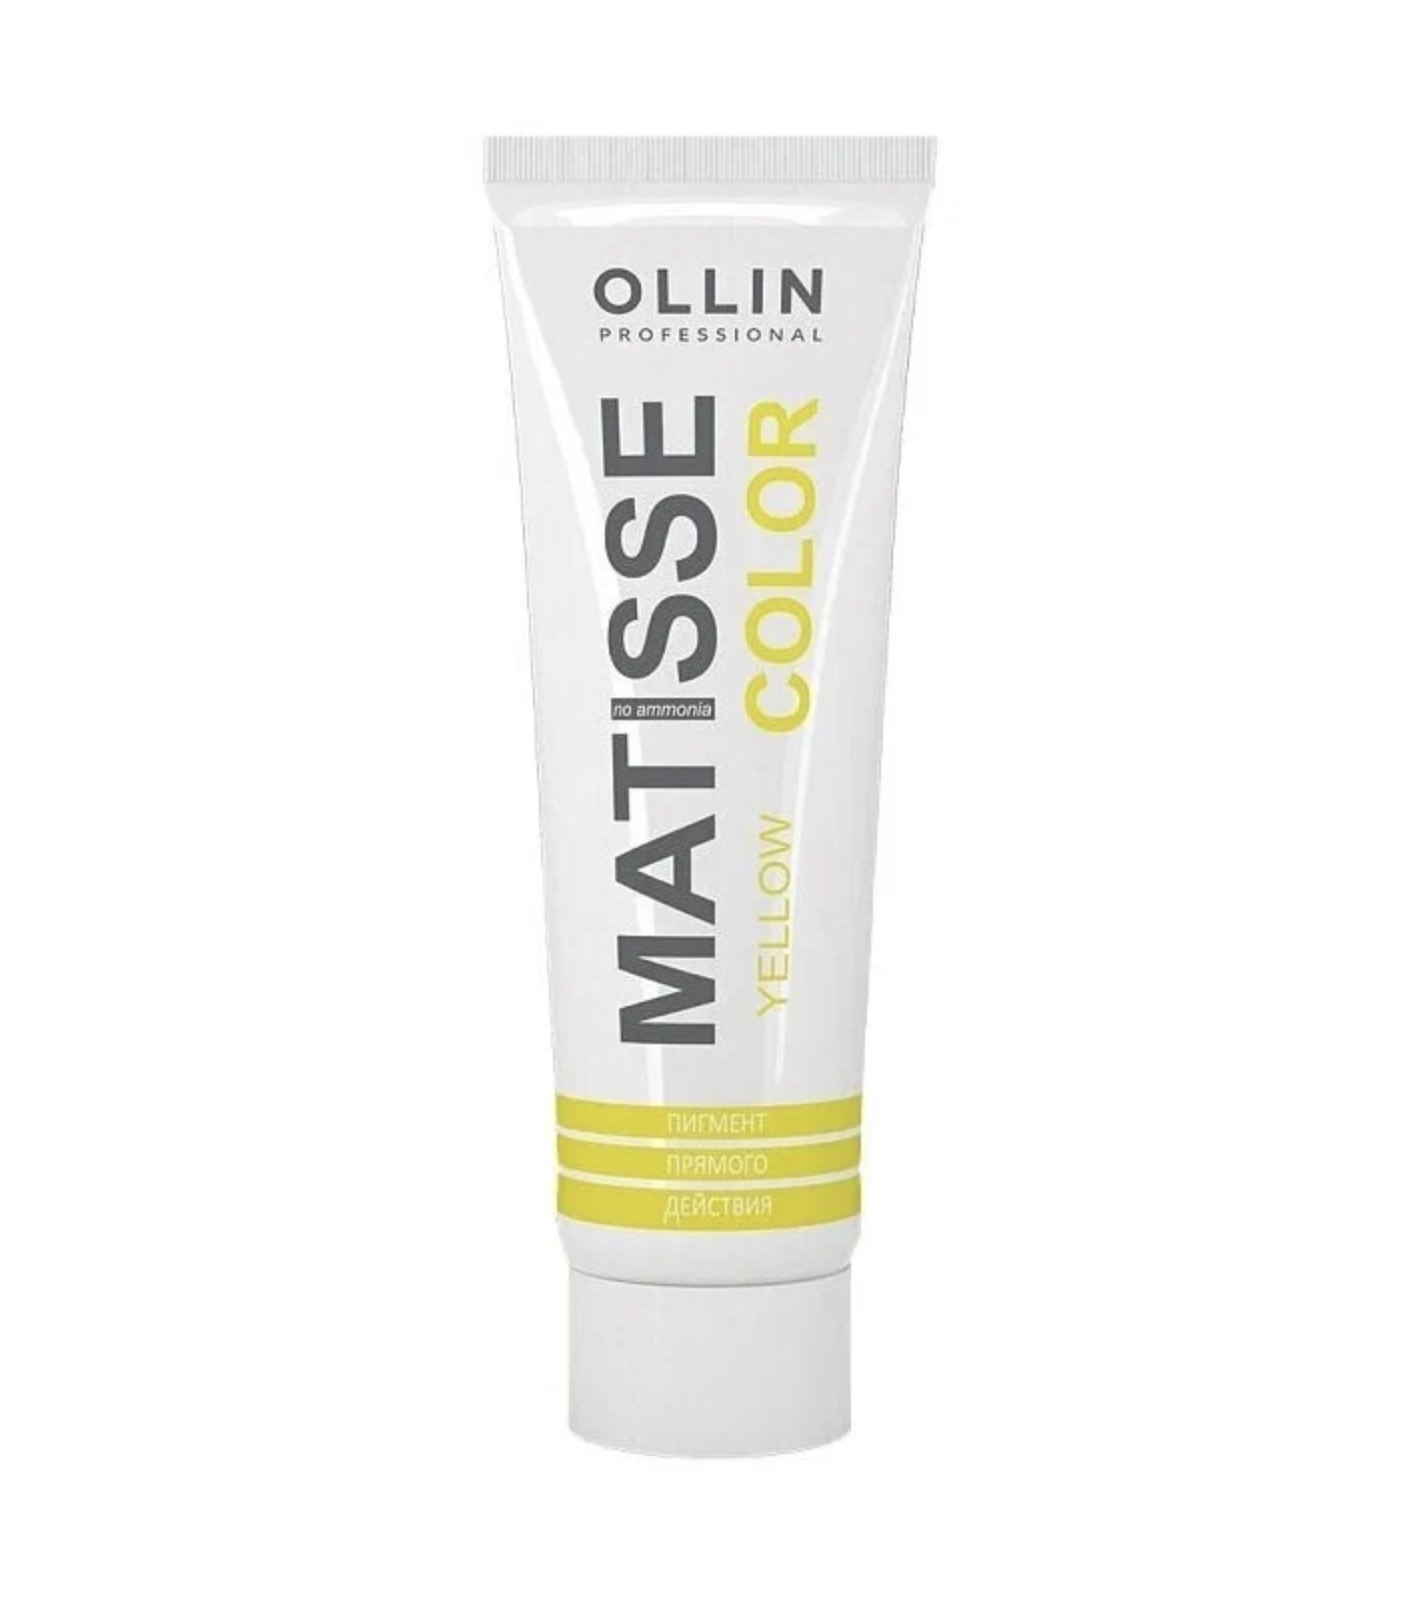   / Ollin Professional -      Matisse Yellow  100 